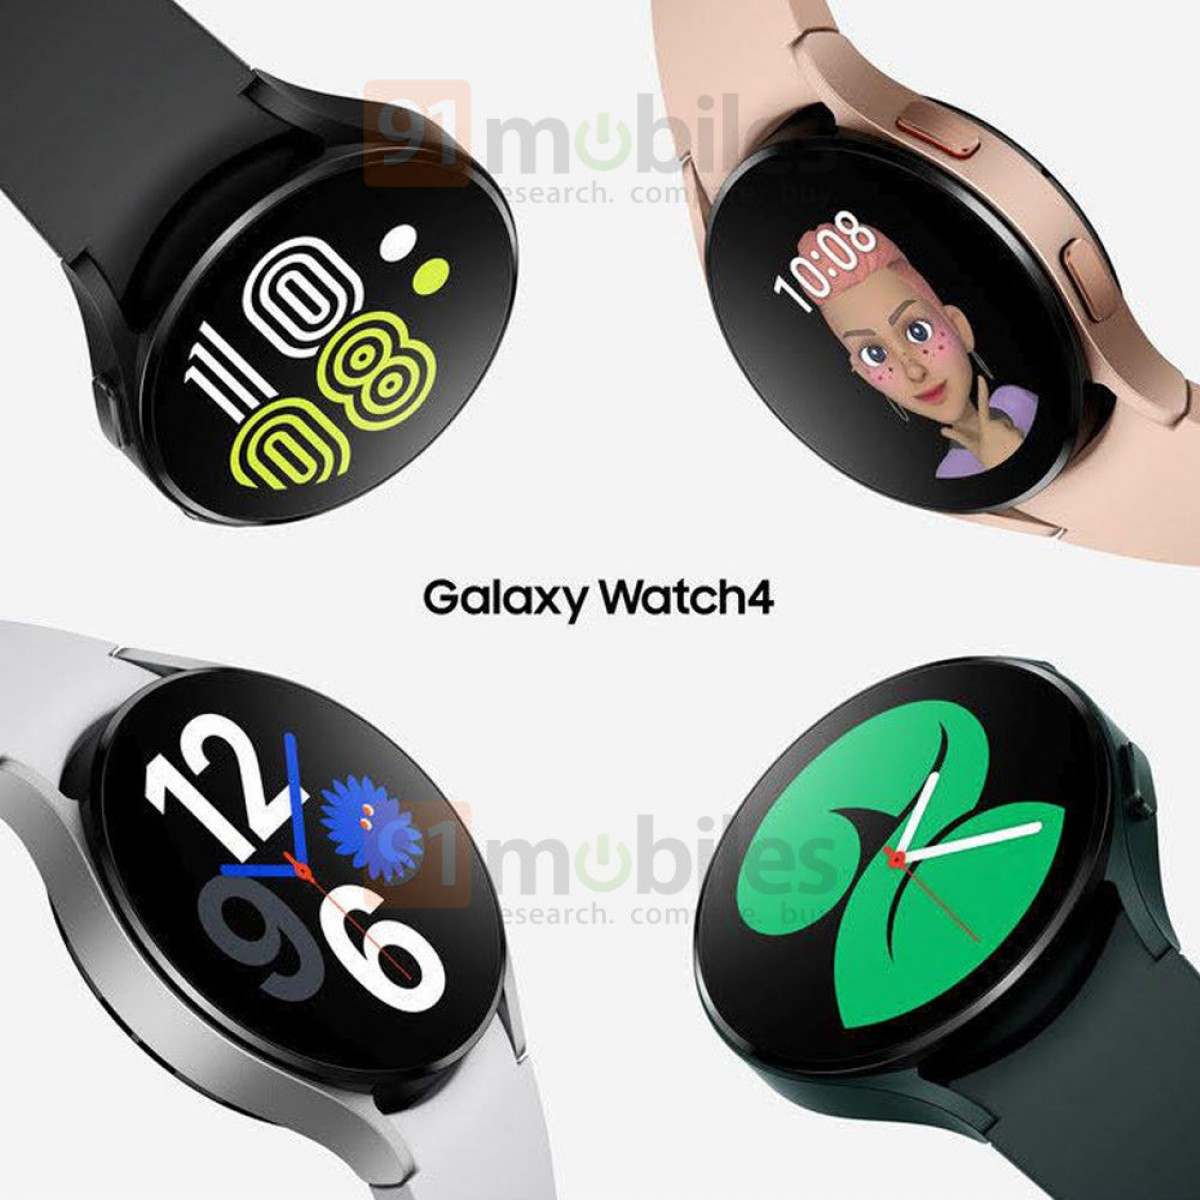 Samsung Galaxy Watch 4 renders. Image: 91 Mobiles